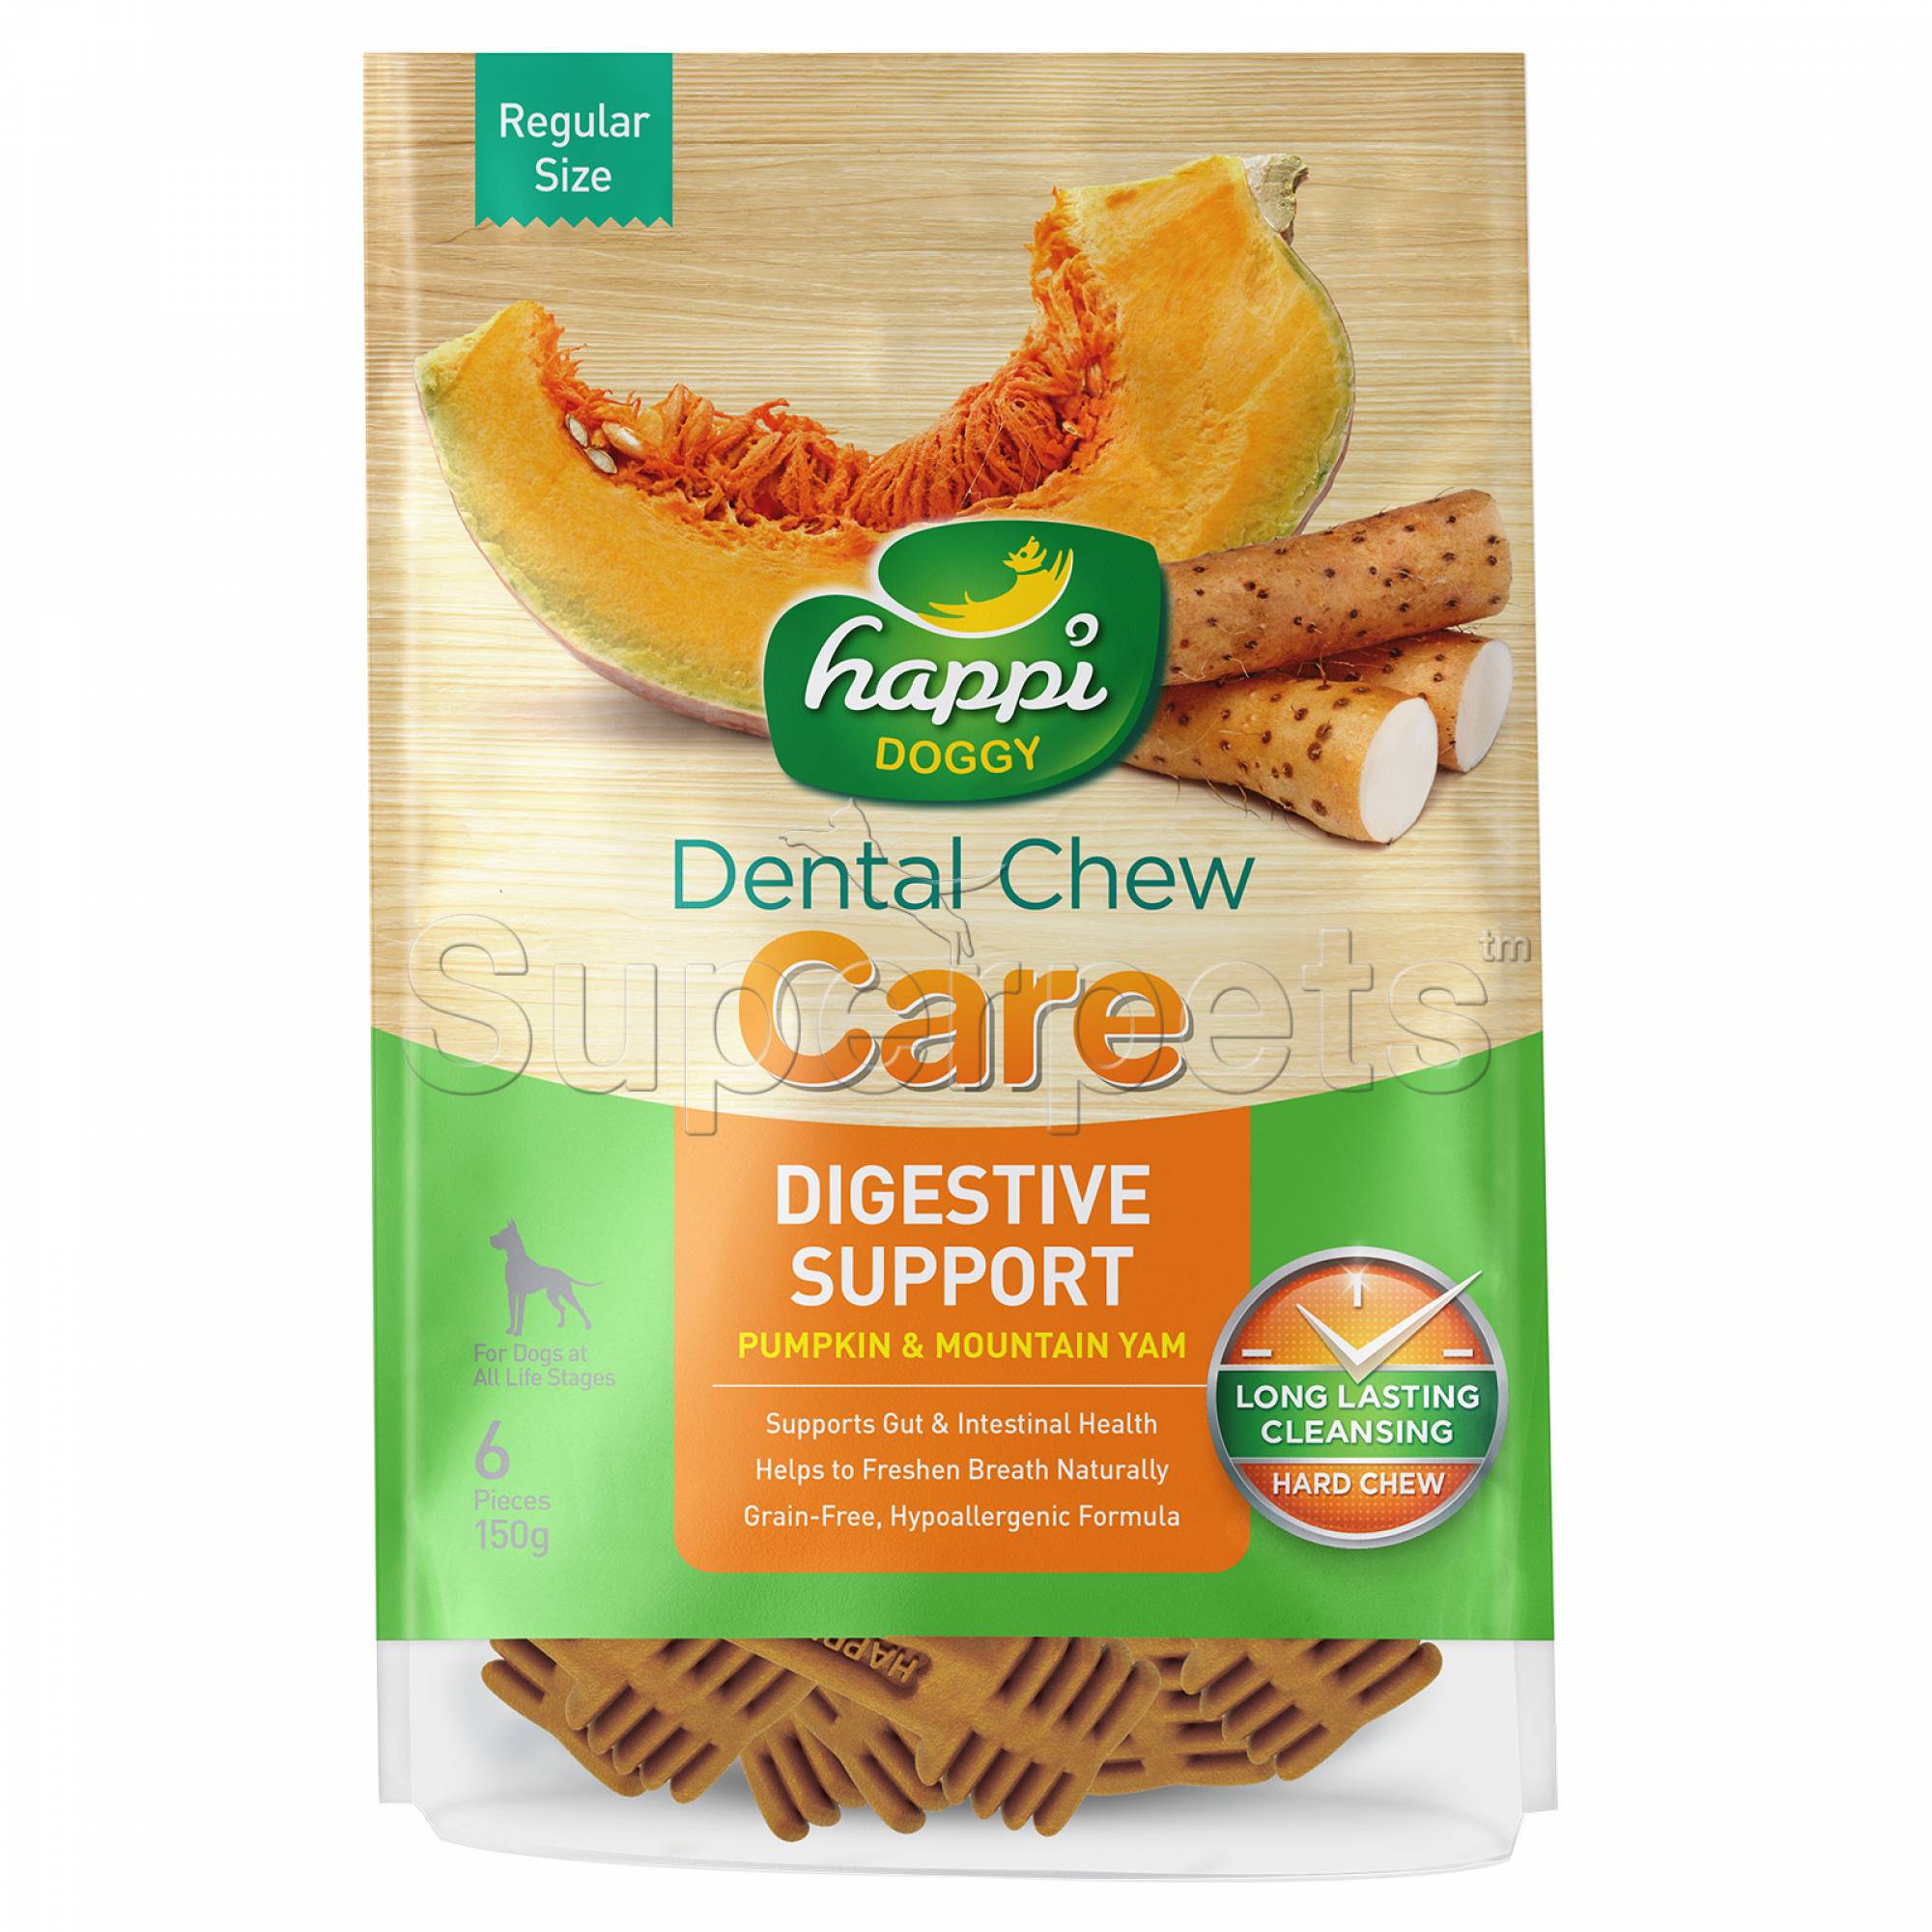 Happi Doggy H342 Dental Chew Care (Digestive Support) Regular Size 6pcs 150g